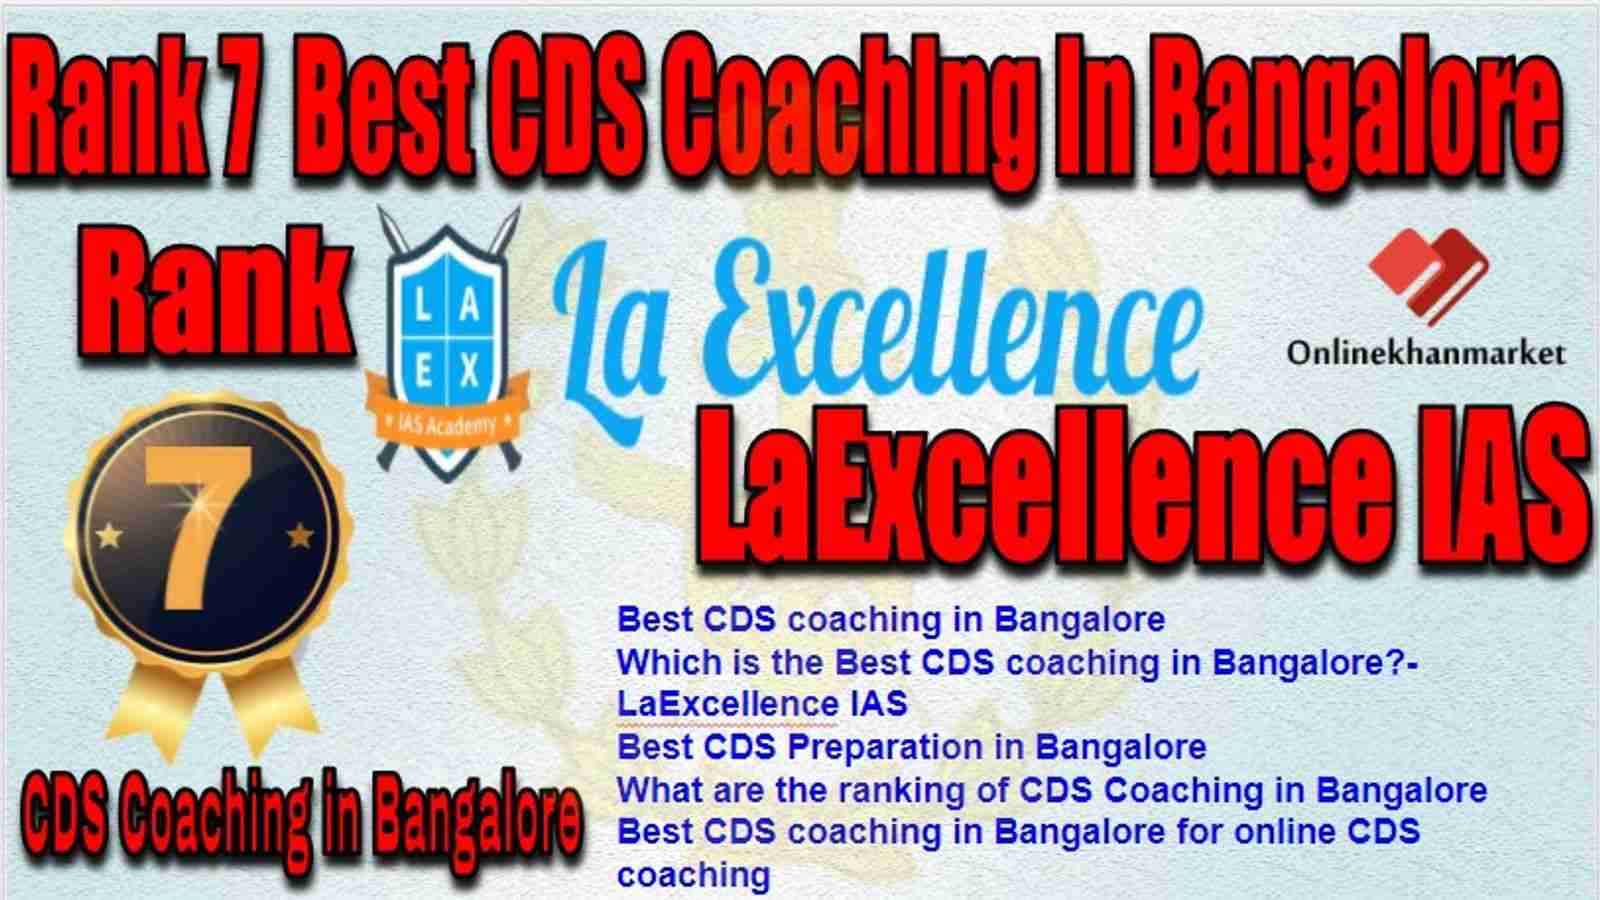 Rank 7 Best CDS Coaching in bangalore